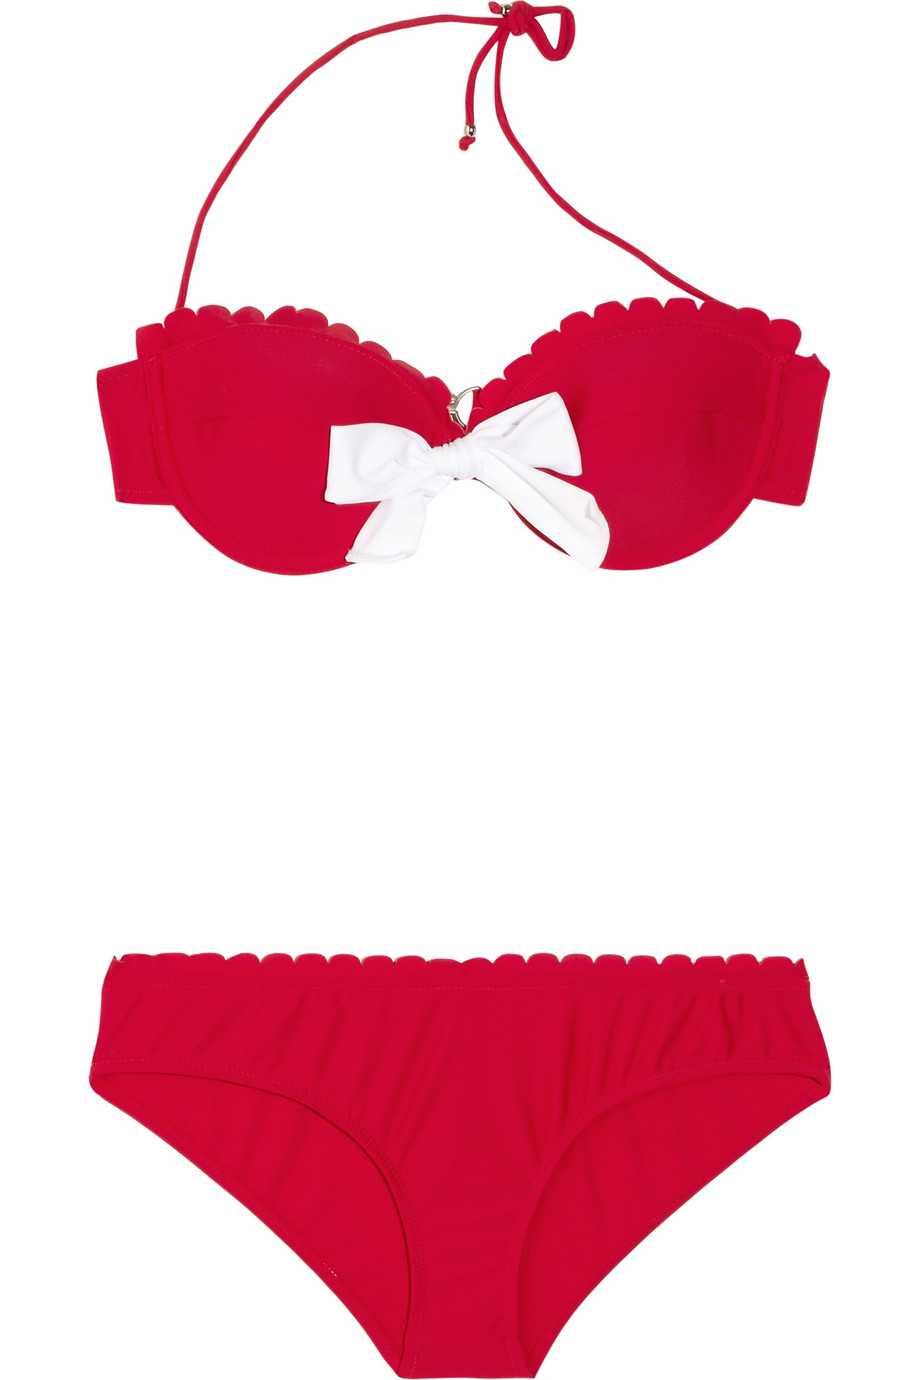 Lyst - Miu miu Bow-embellished Halterneck Bikini in Red